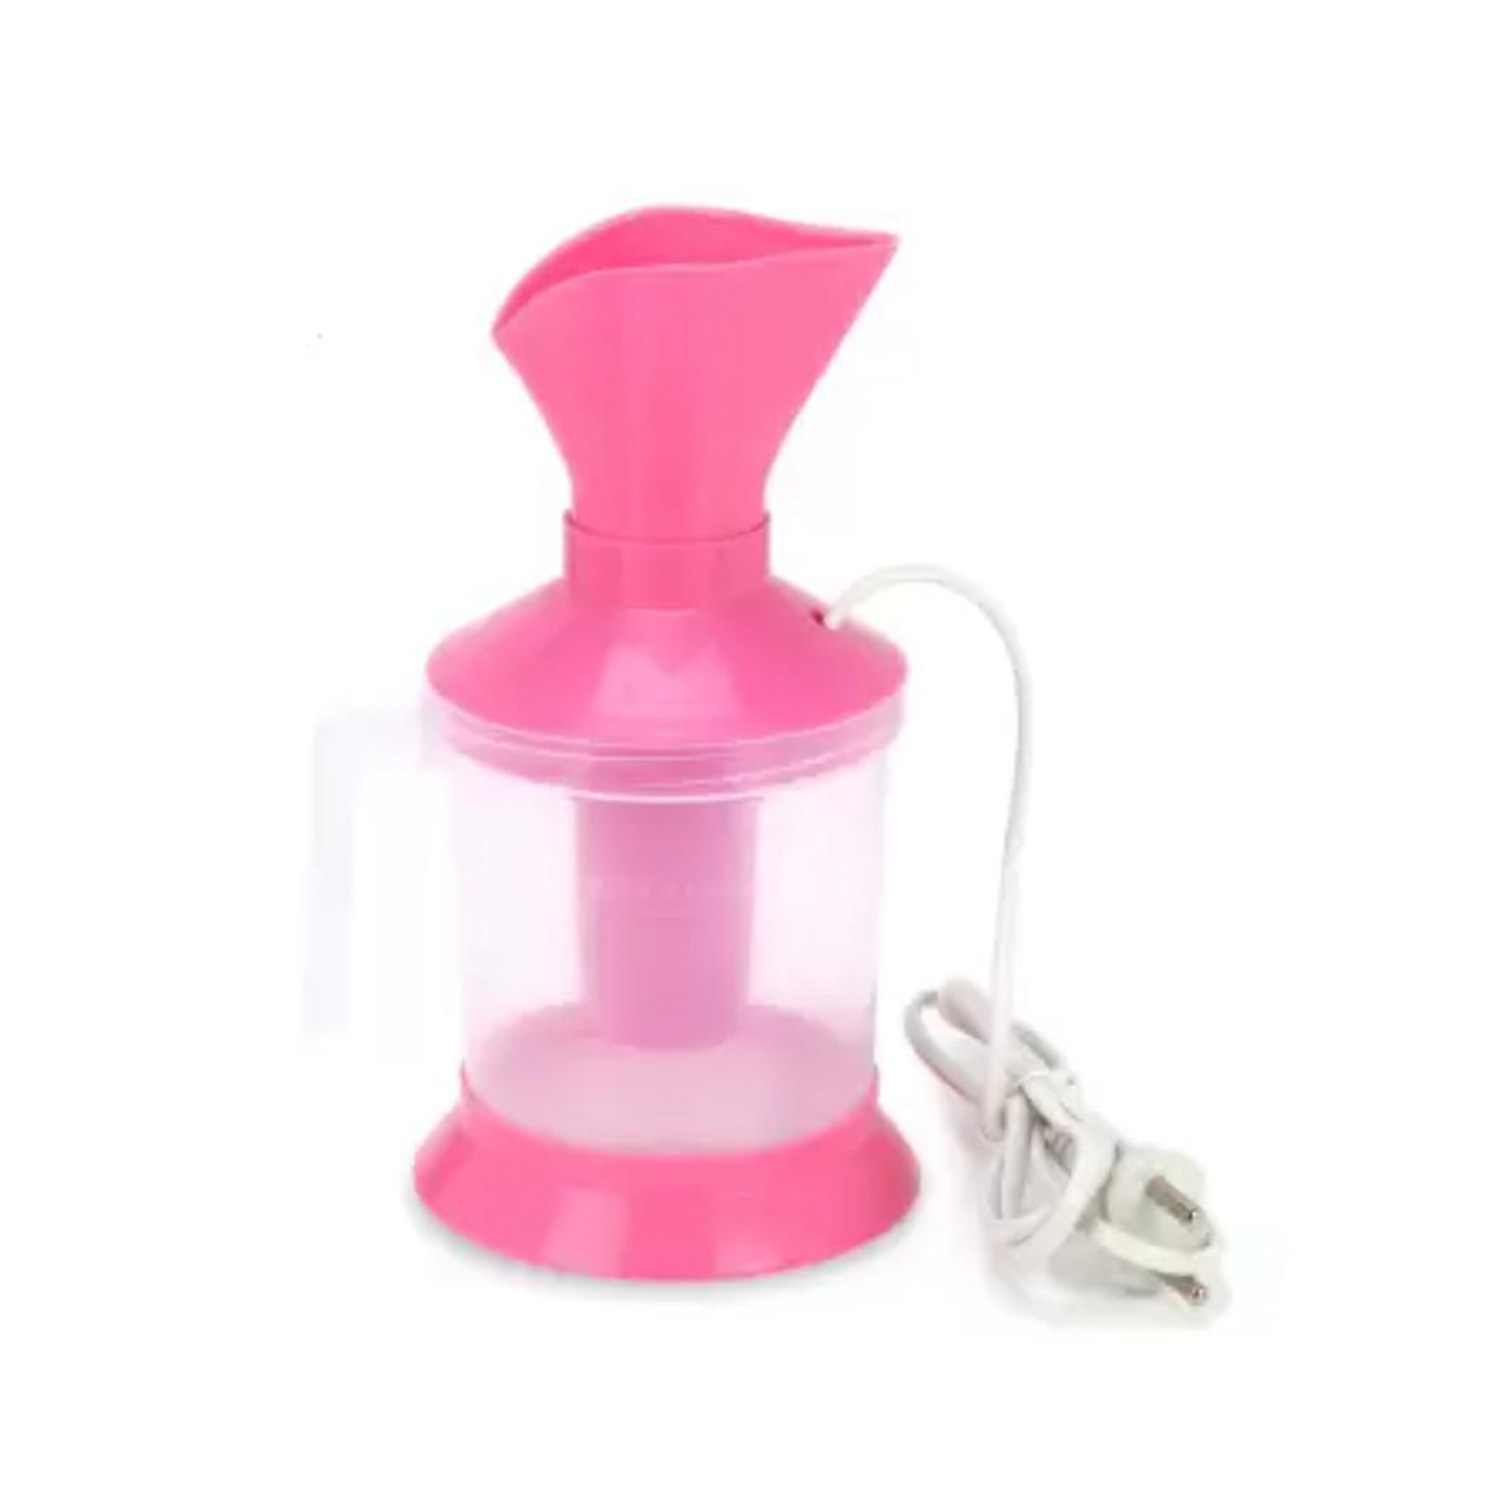 Sukhson India 2 In 1 Steam Inhaler, For Wellness, For Inhalation, Soothes, Balm effect Vaporizer (Pink)